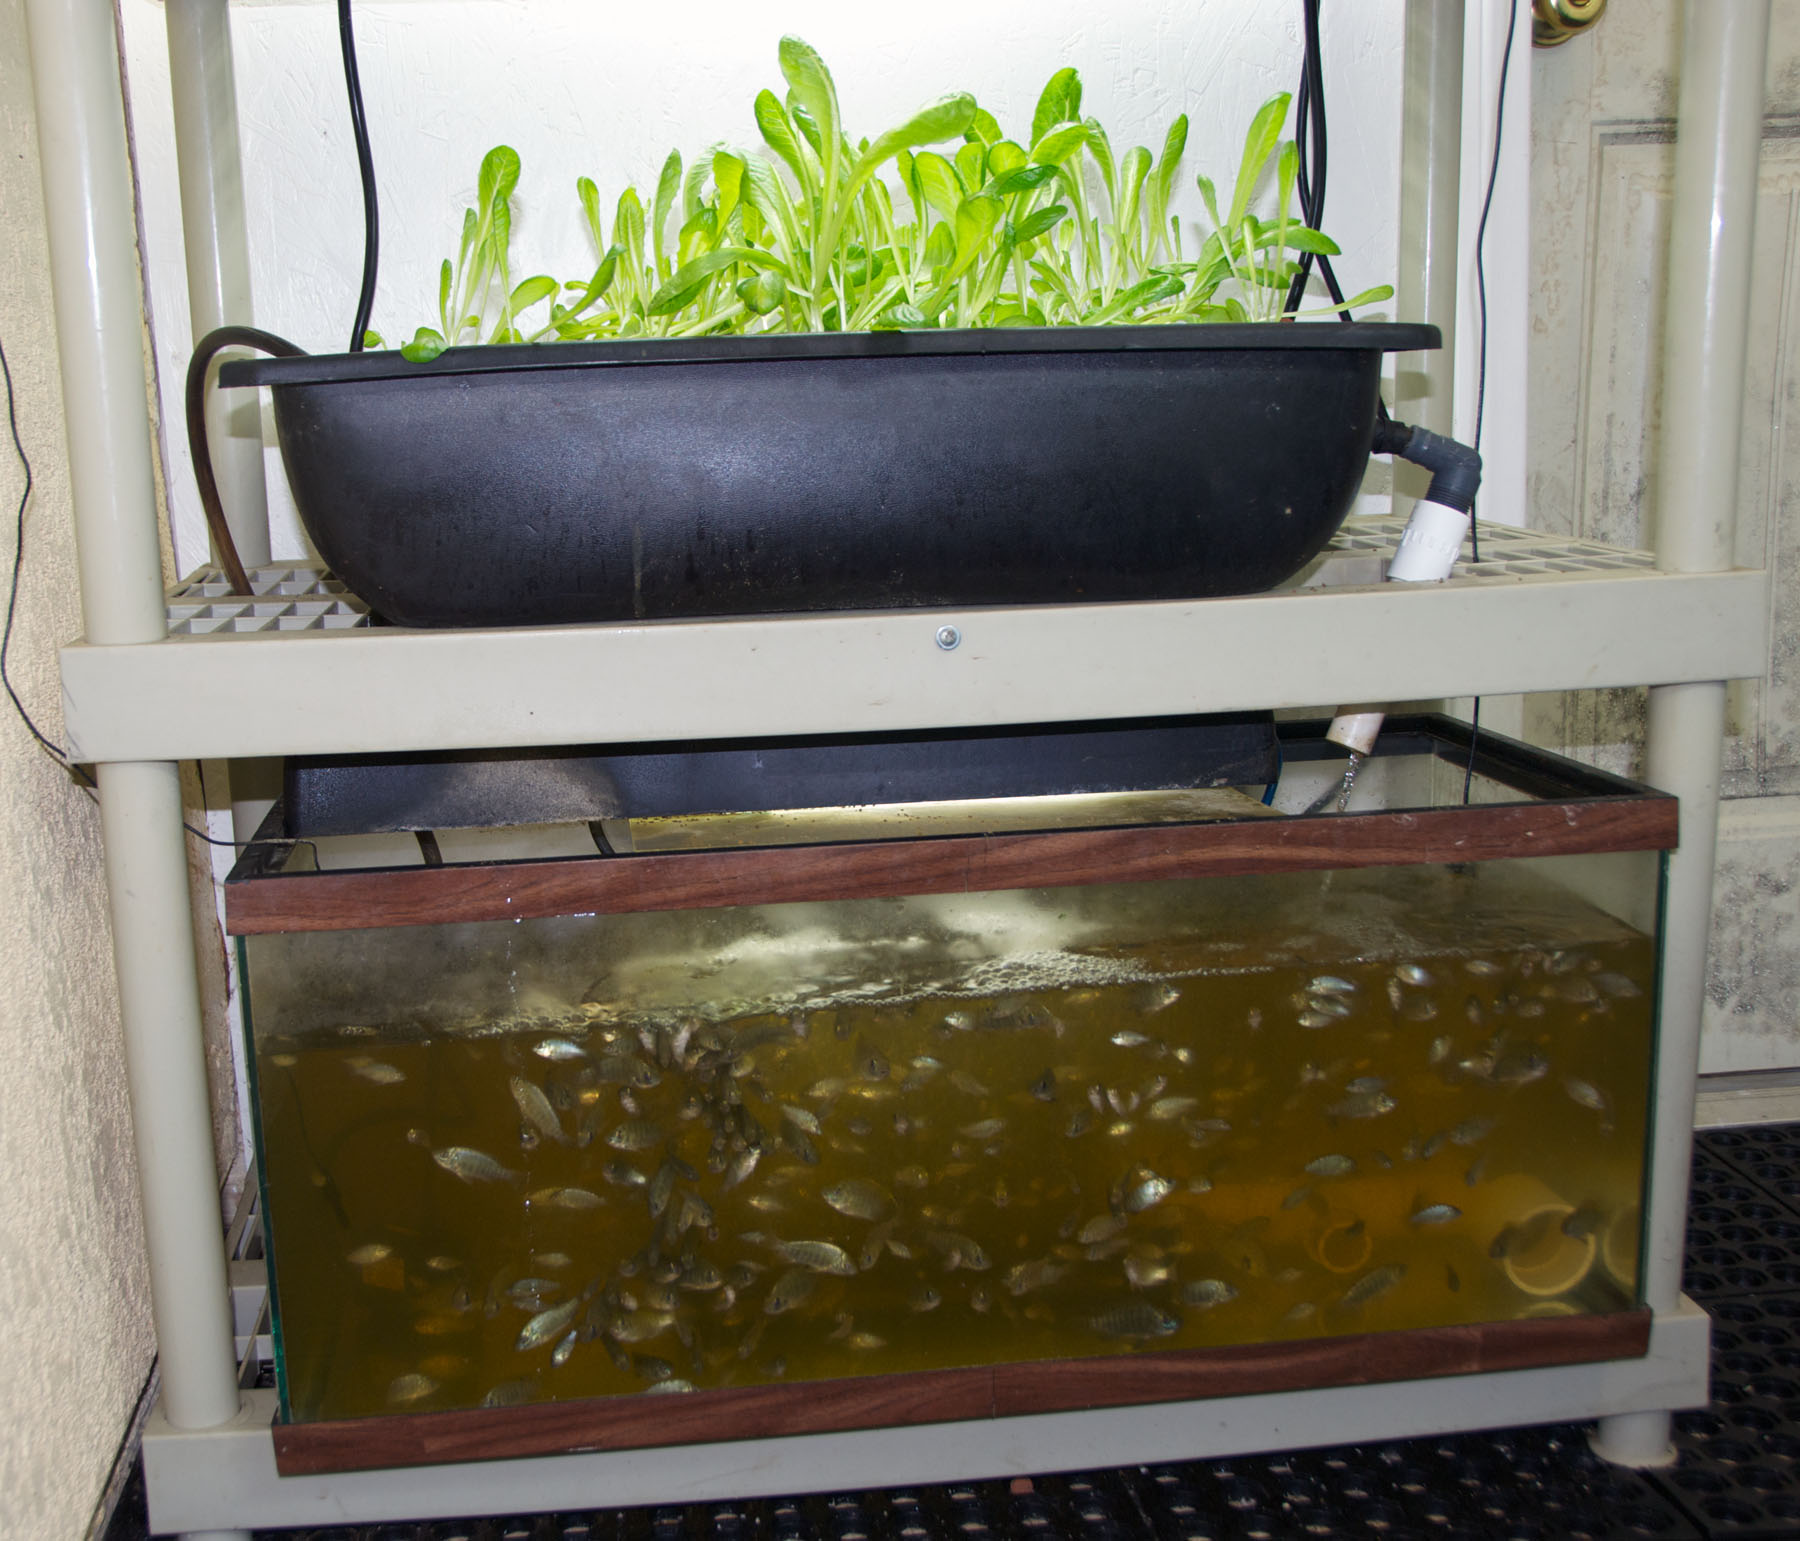 You can turn any aquarium into an Aquaponics System